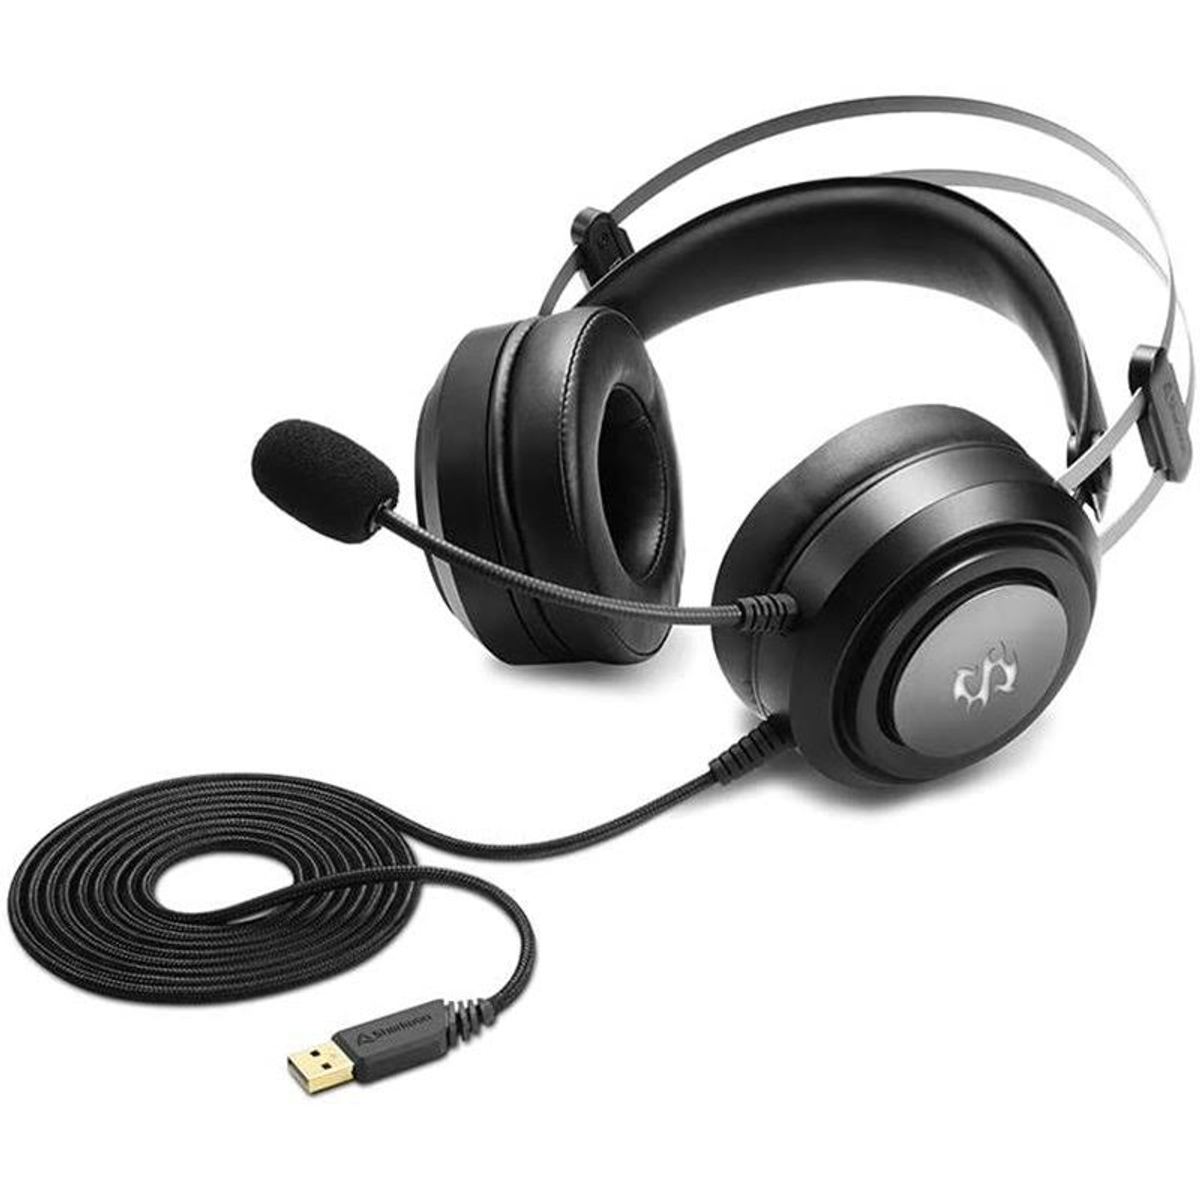 Headset SGH30, Schwarz SKILLER Over-ear SHARKOON